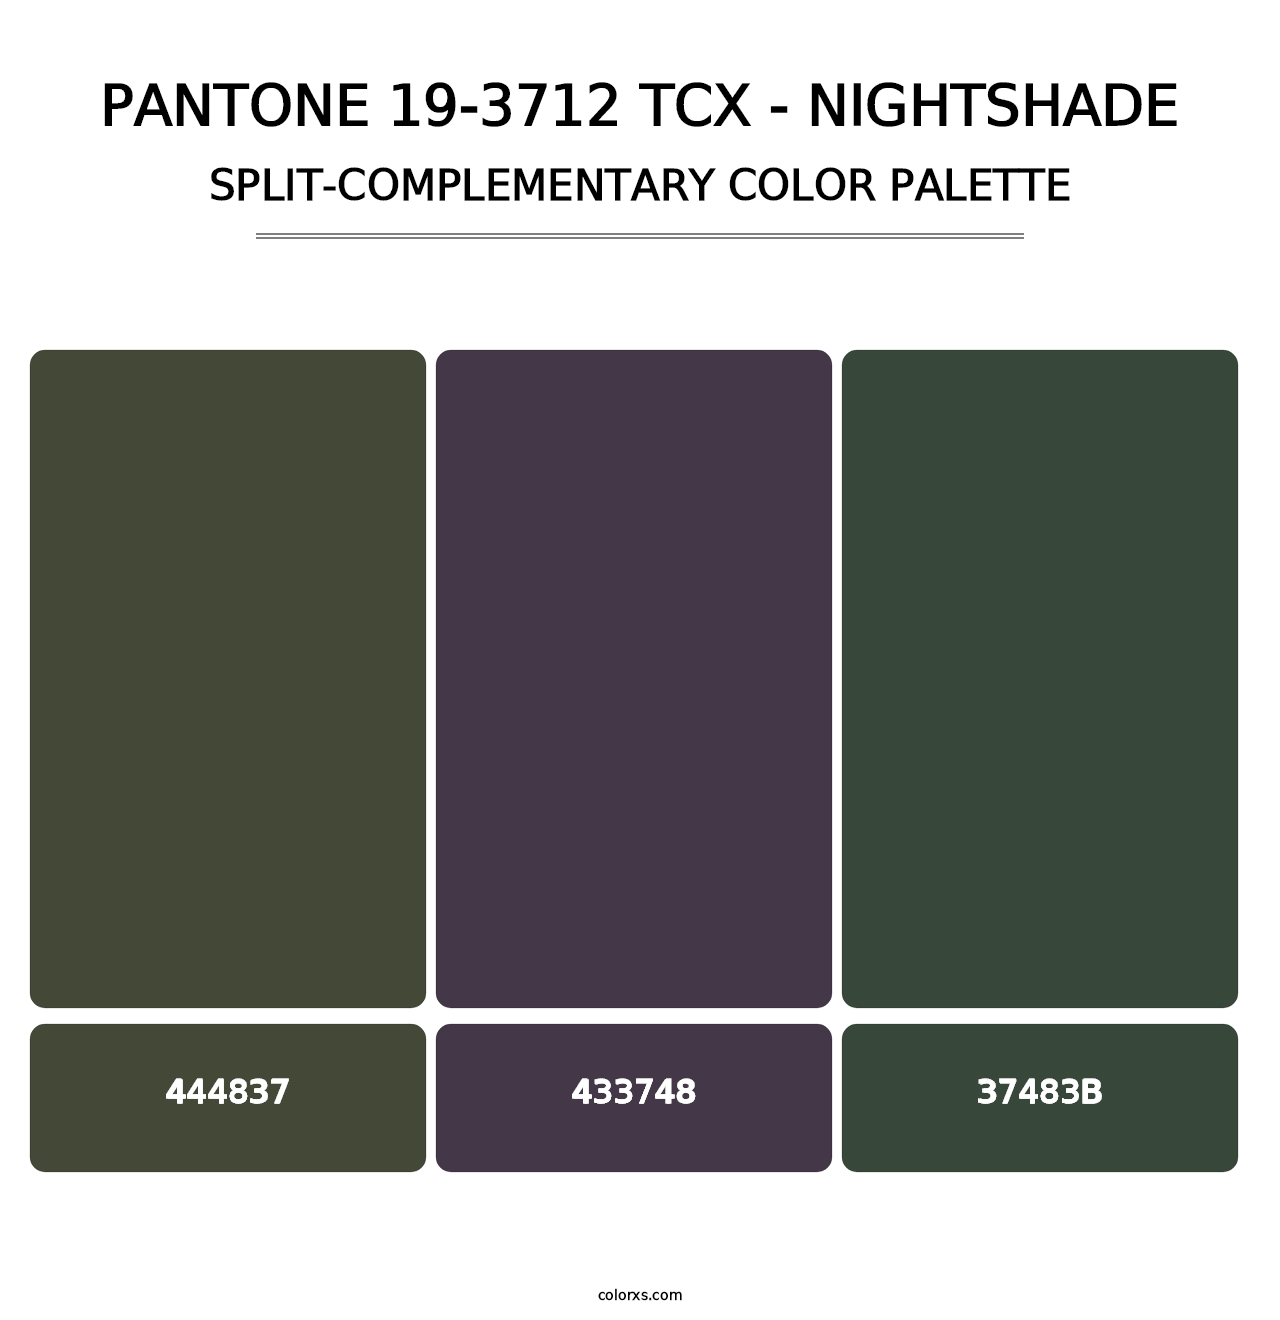 PANTONE 19-3712 TCX - Nightshade - Split-Complementary Color Palette